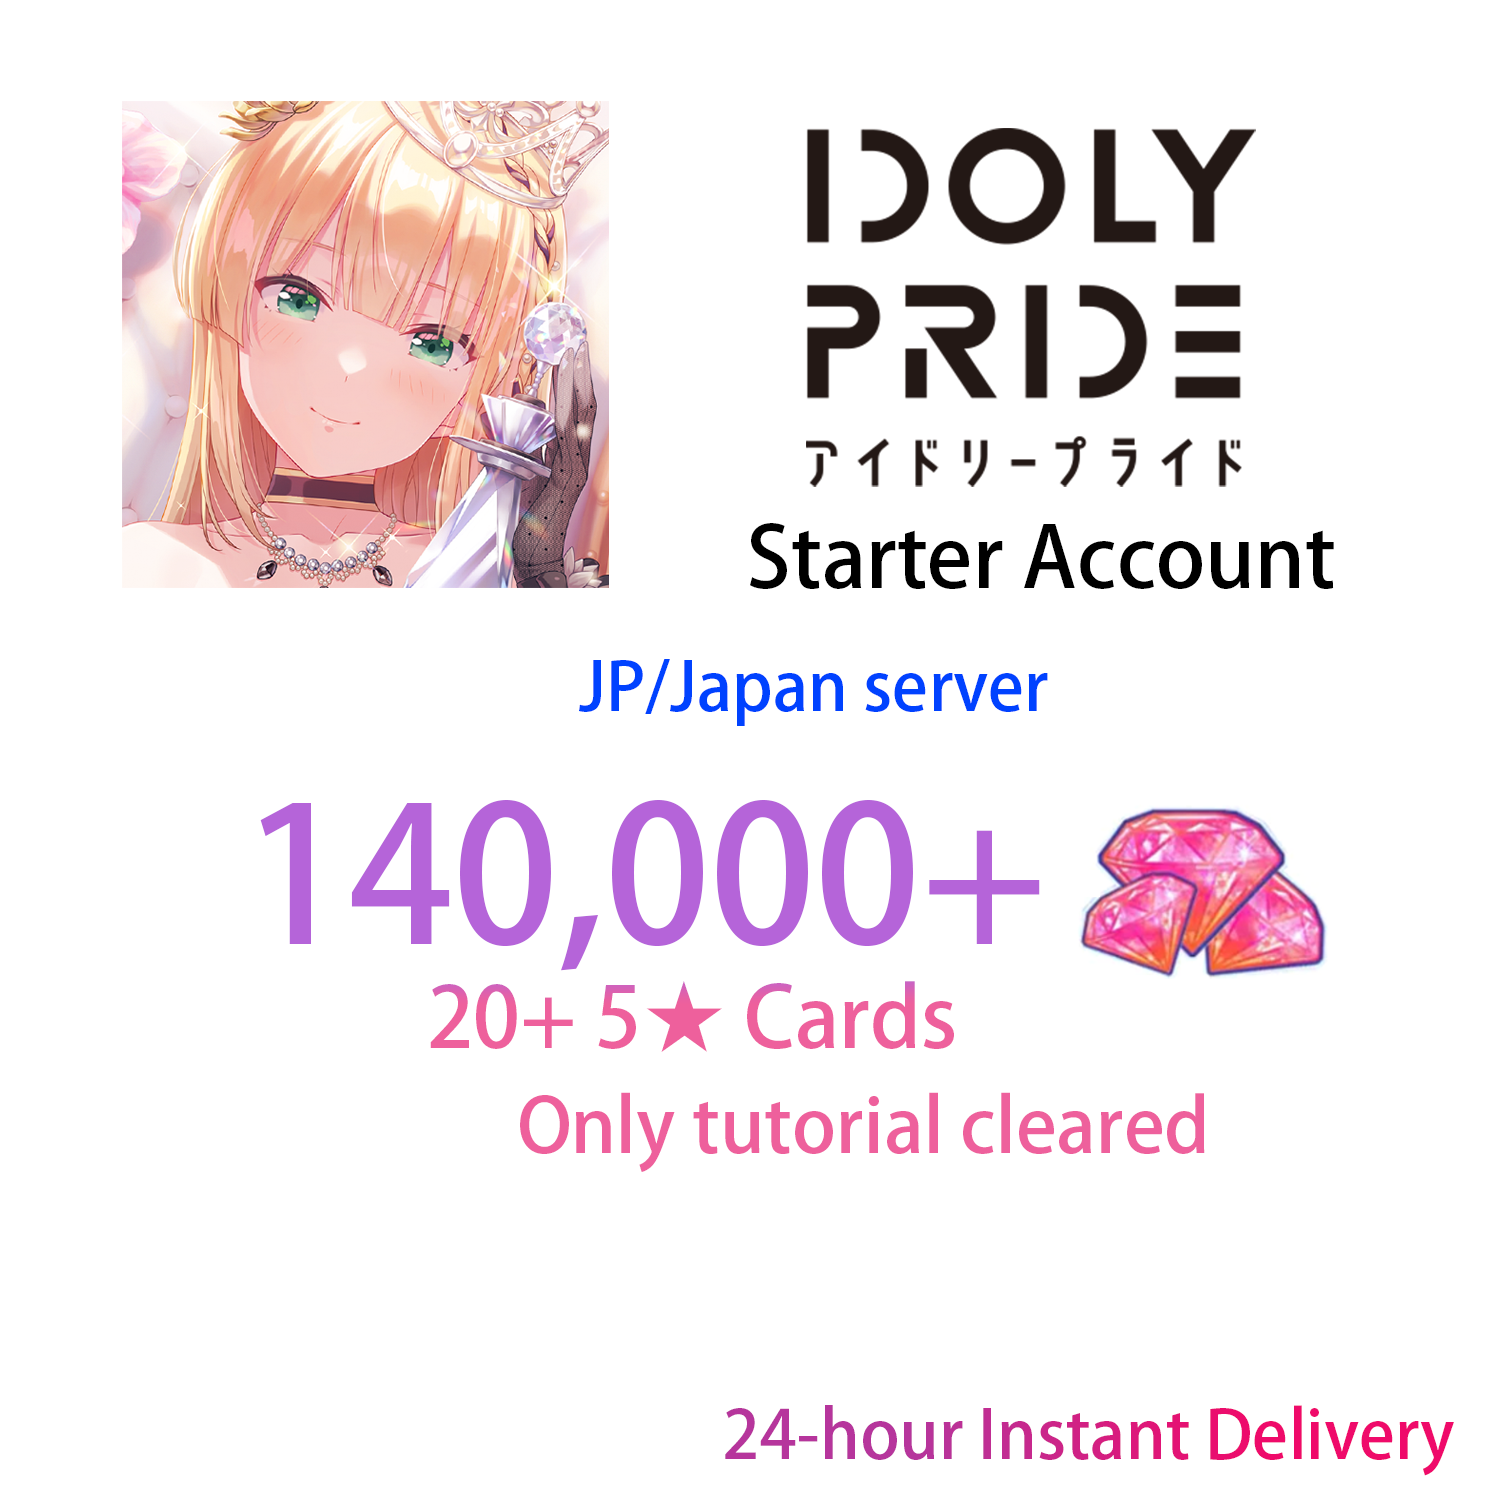 [JP] [INSTANT] 130000 gems & 20+ 5★ IDOLY PRIDE Starter Account-Mobile Games Starter